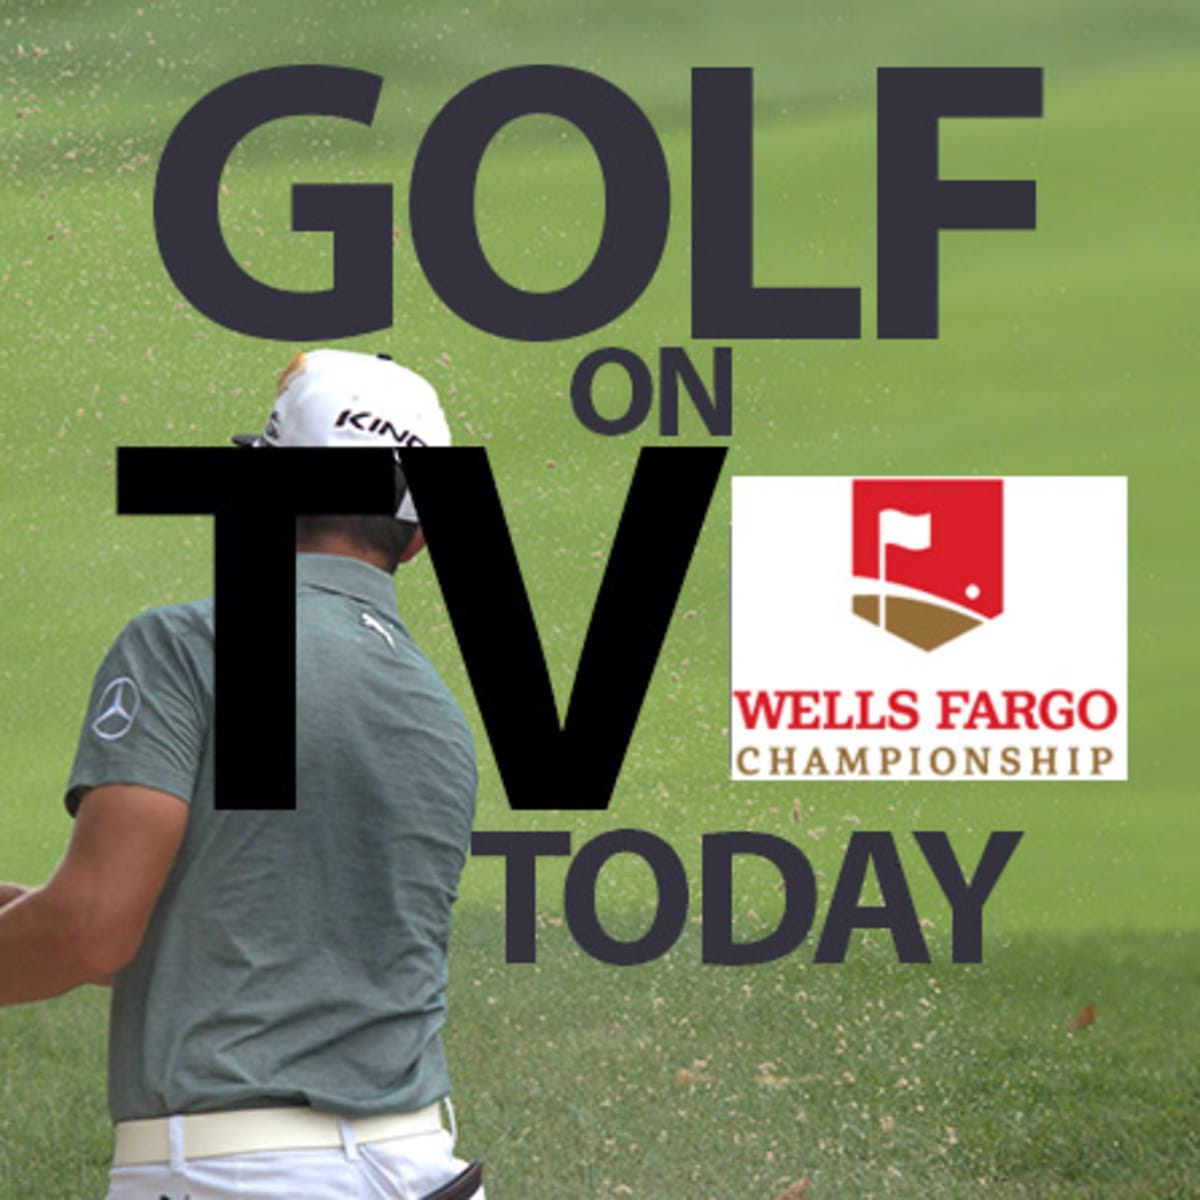 Golf on TV Today (Sunday, May 5) 2019 Wells Fargo Championship